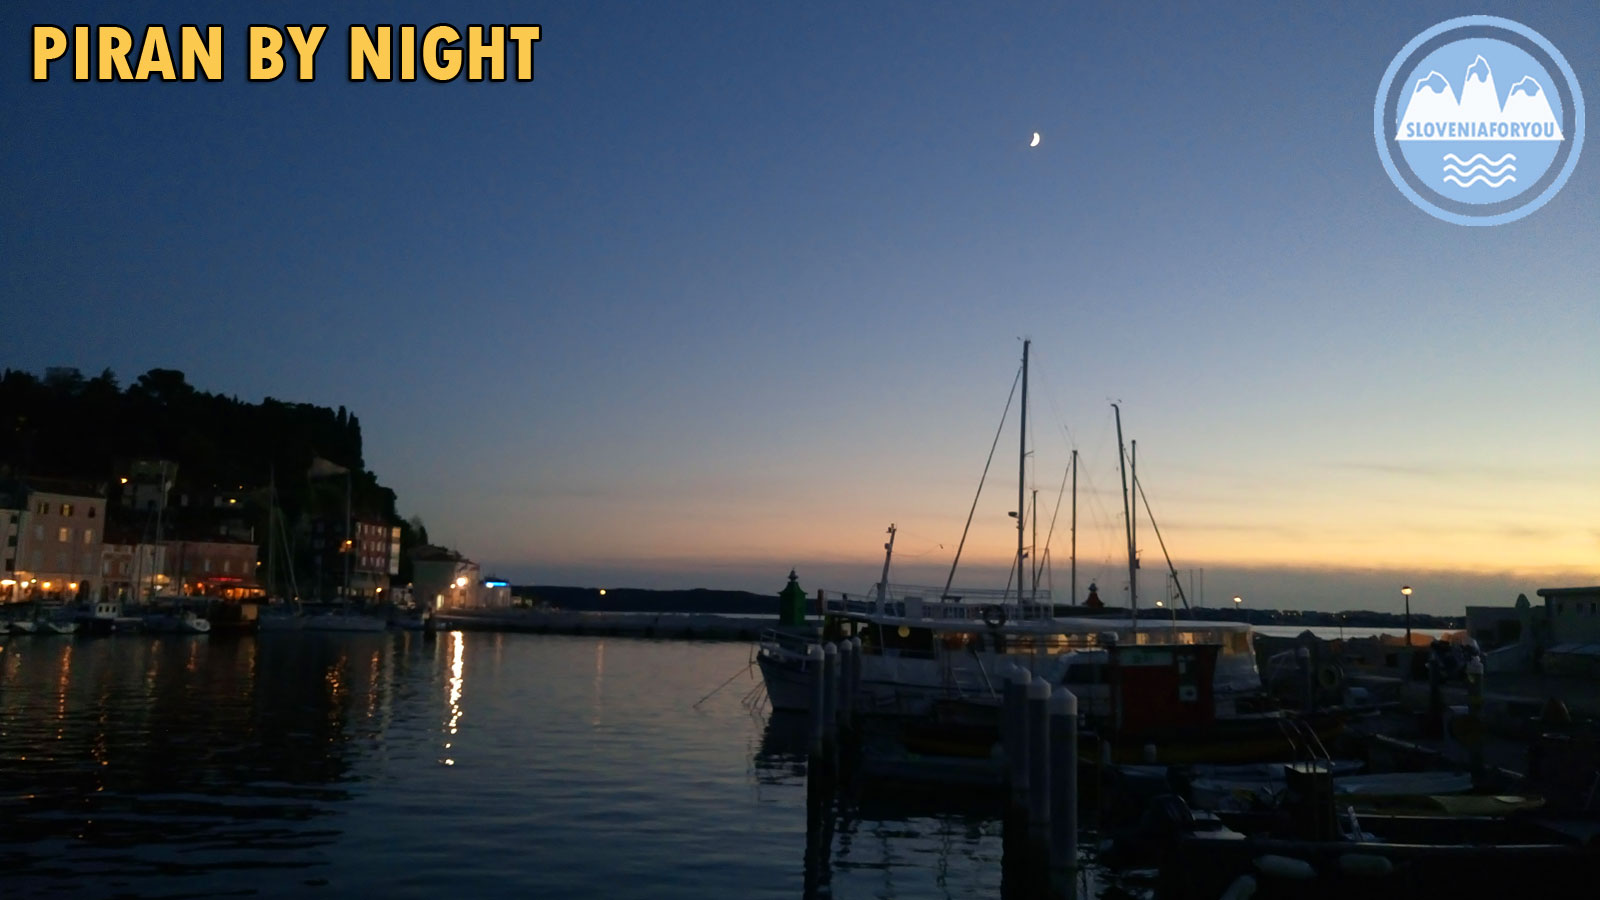 Piran Harbour by Night - Sloveniaforyou